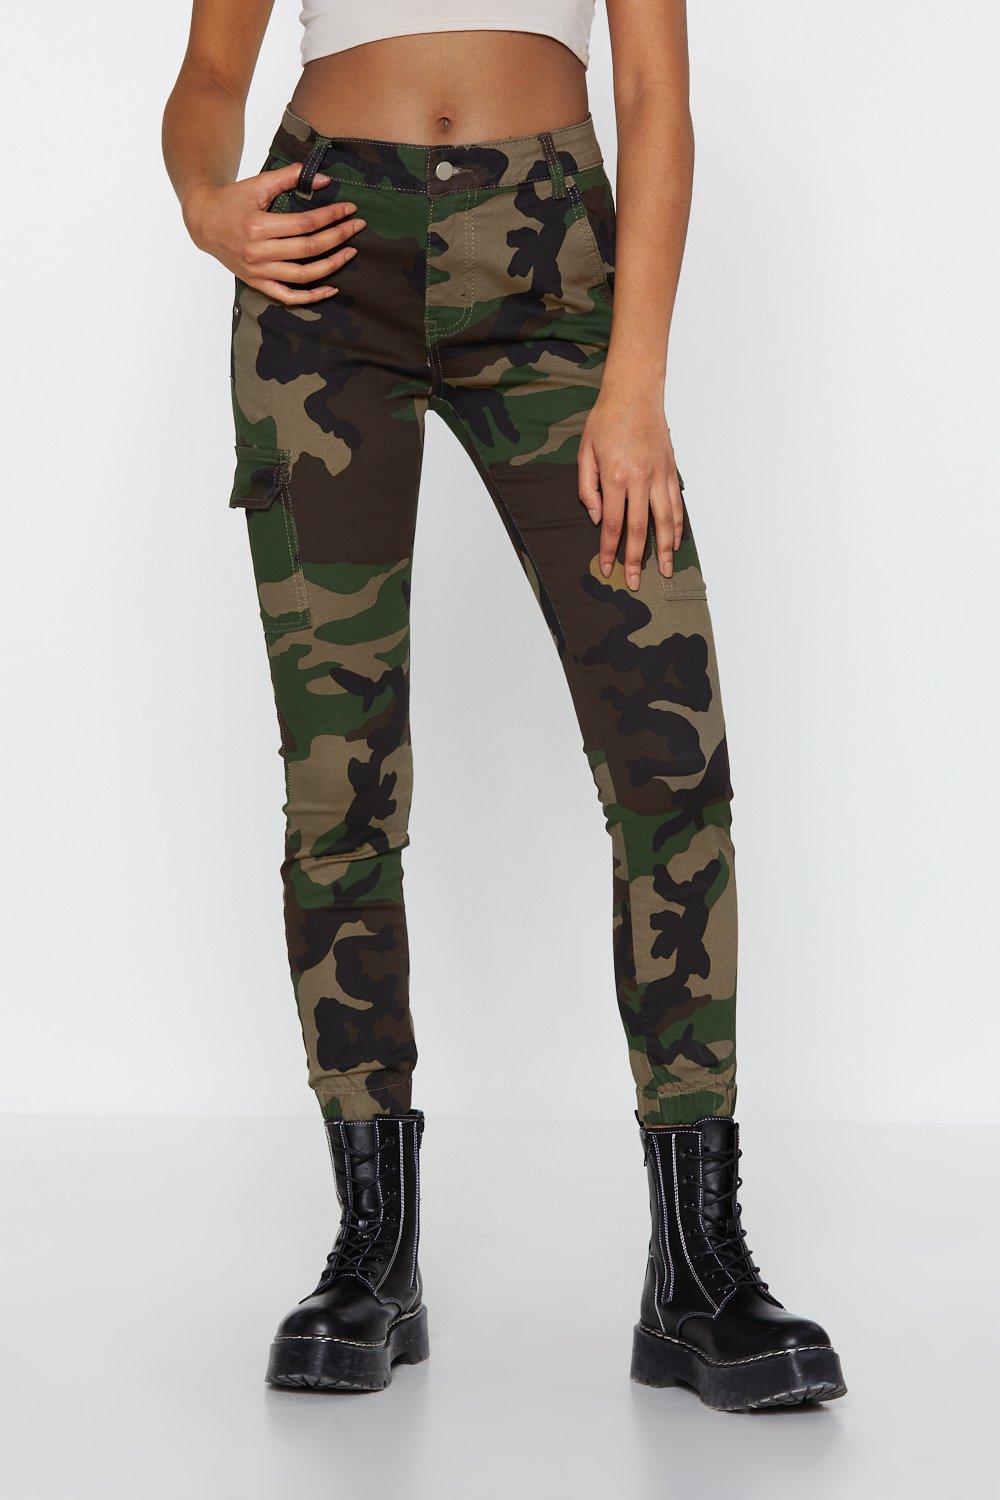 army skinny jeans